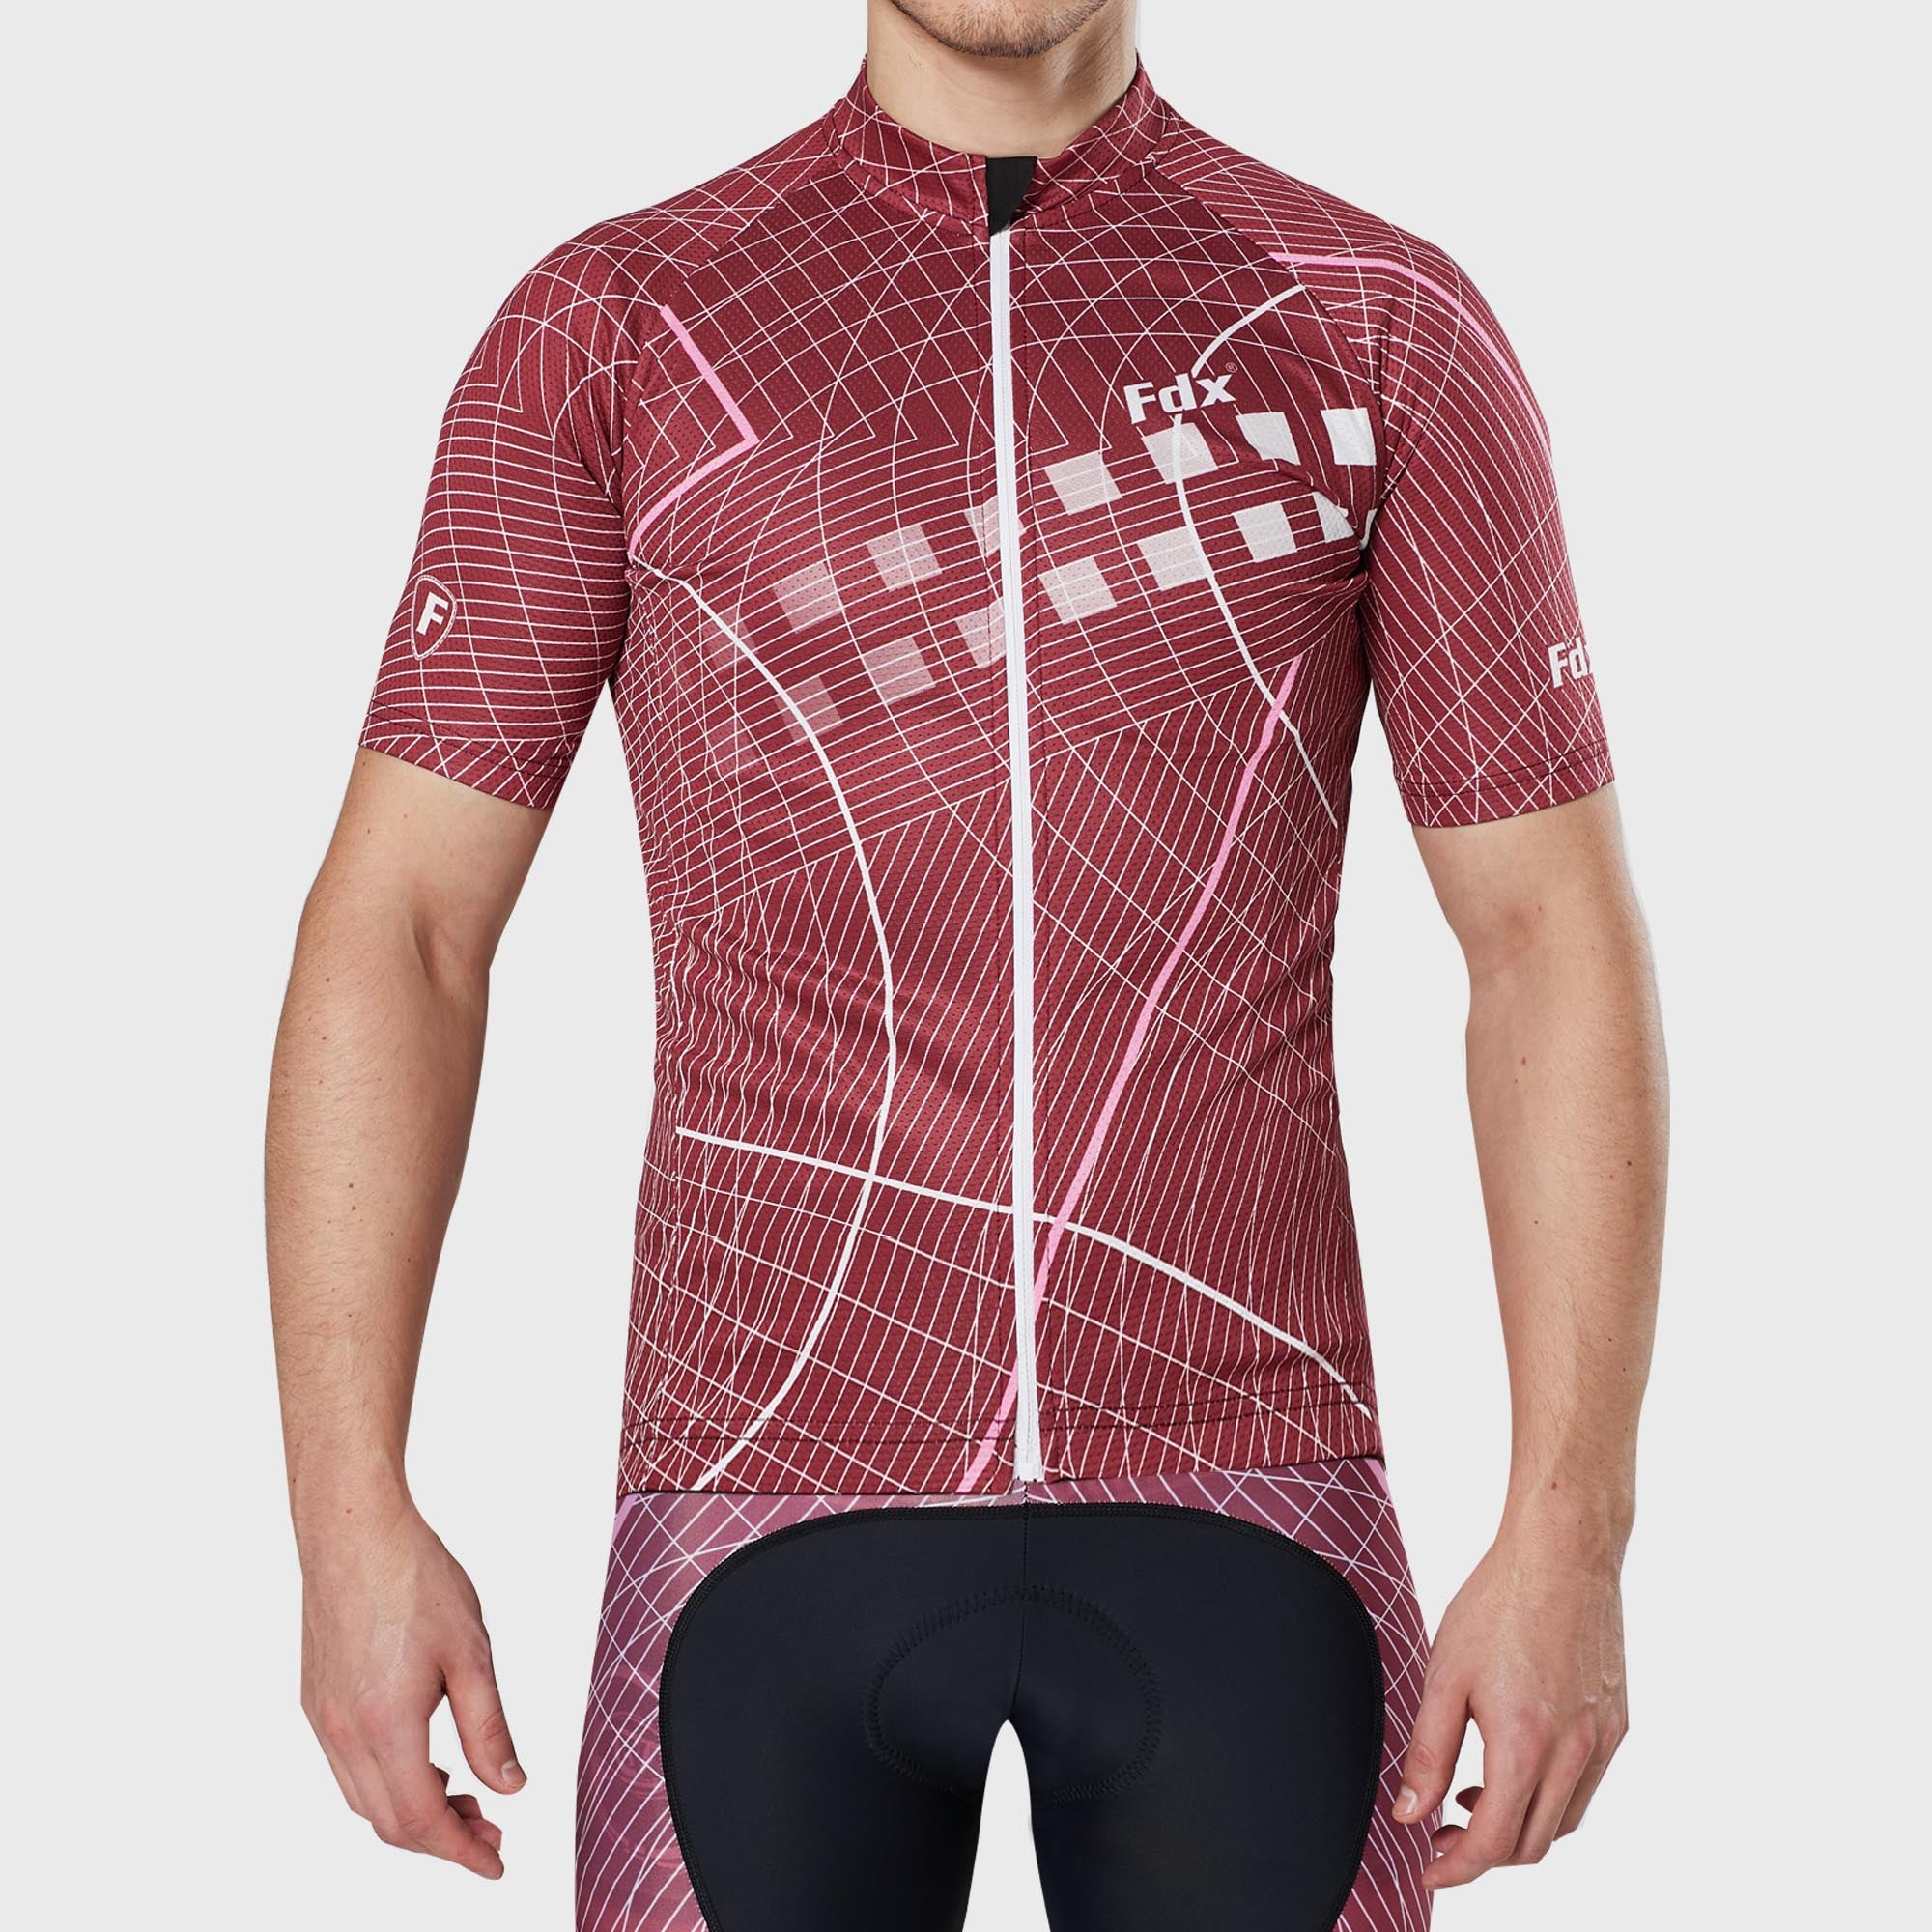 Fdx Mens Red Short Sleeve Cycling Jersey for Summer Best Road Bike Wear Top Light Weight, Full Zipper, Pockets & Hi-viz Reflectors - Classic II